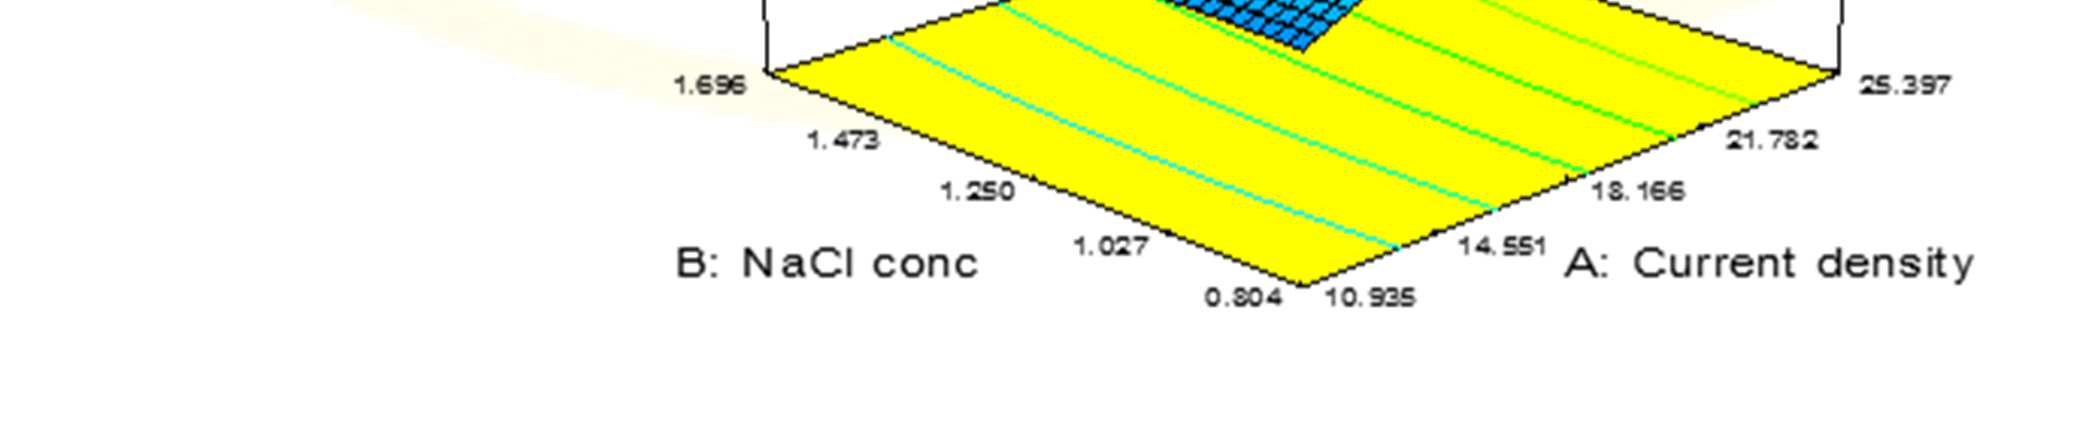 Design-Expert Software 99 63 X1 = B: NaCl conc X2 = C: Electrolysis time Actual Factor A: Current density = 18.165 13 94.25 85.5 76.75 68 37.91 1.7 32.7 1.47 27.5 1.25 22.3 C: Electrolysis time 17.9.8 1.